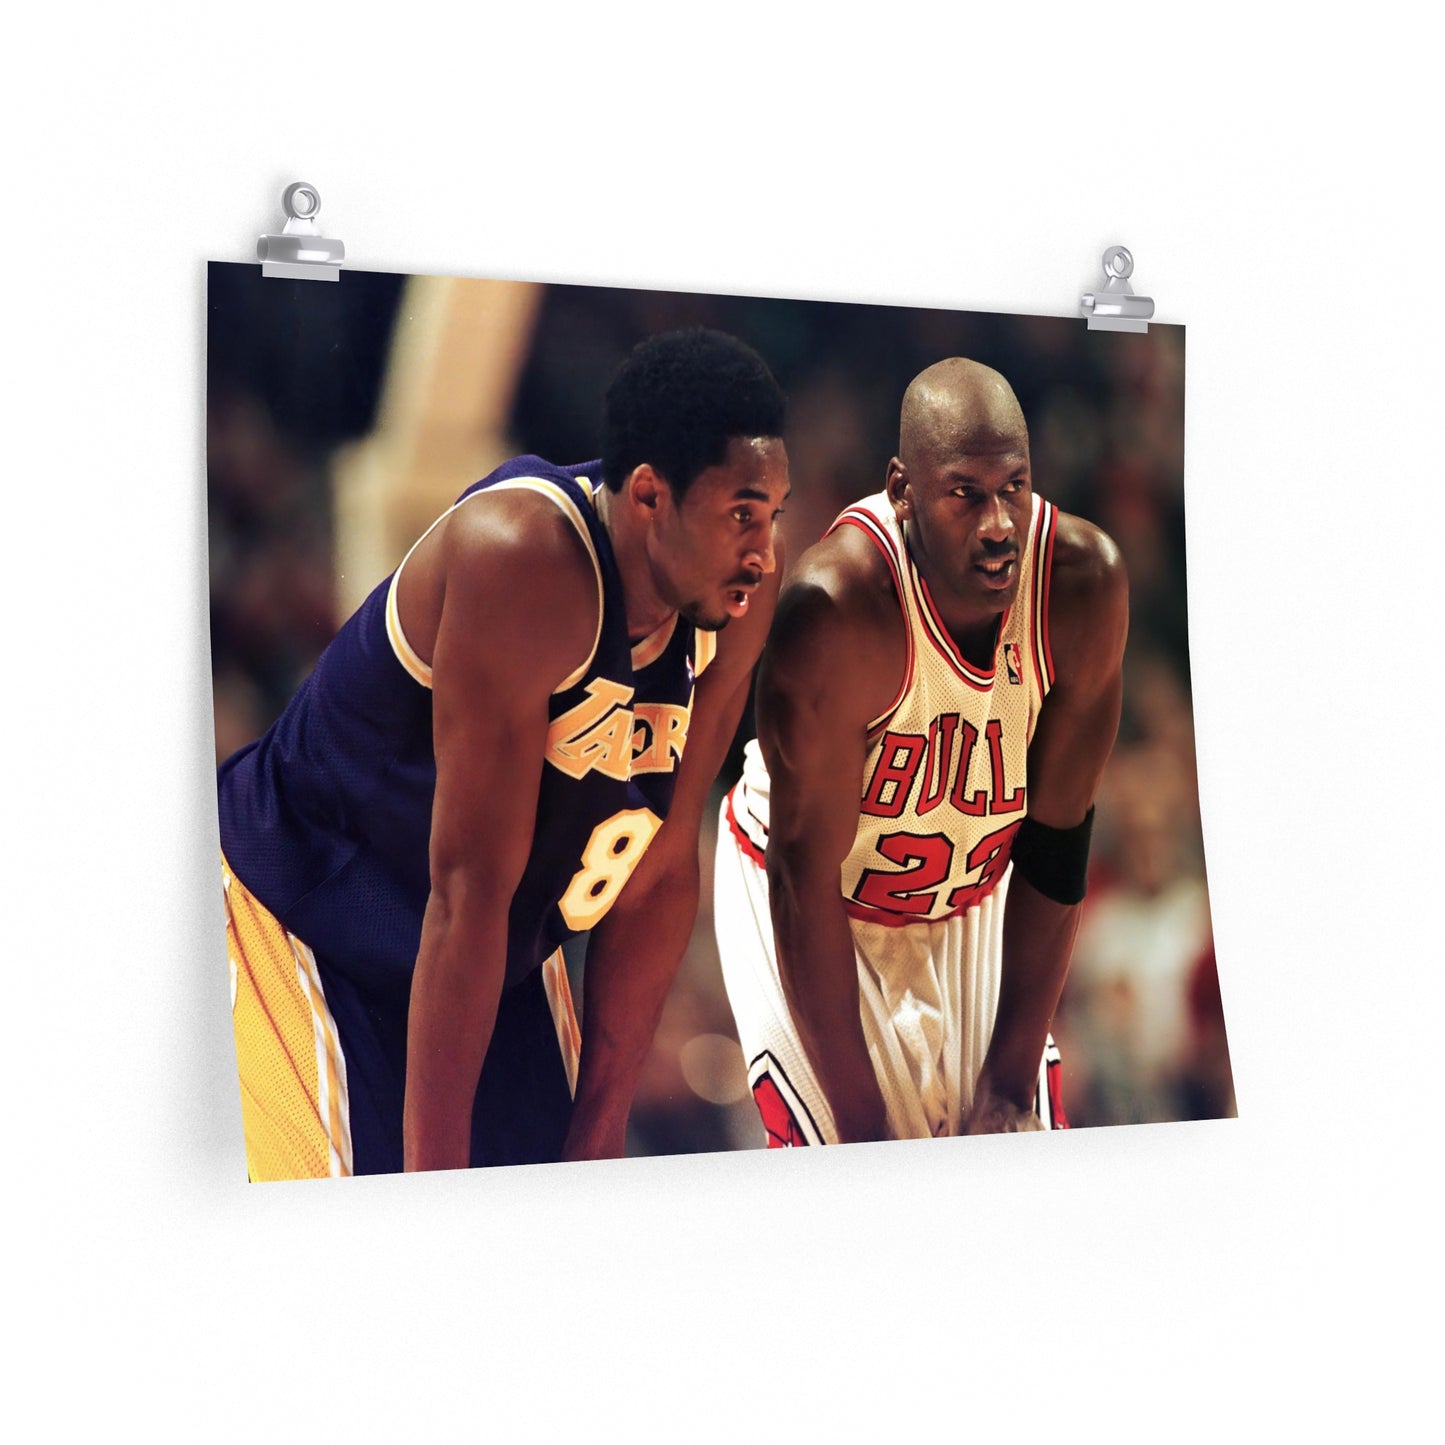 Michael Jordan And Kobe Bryant Speak On Court During An NBA Game Poster